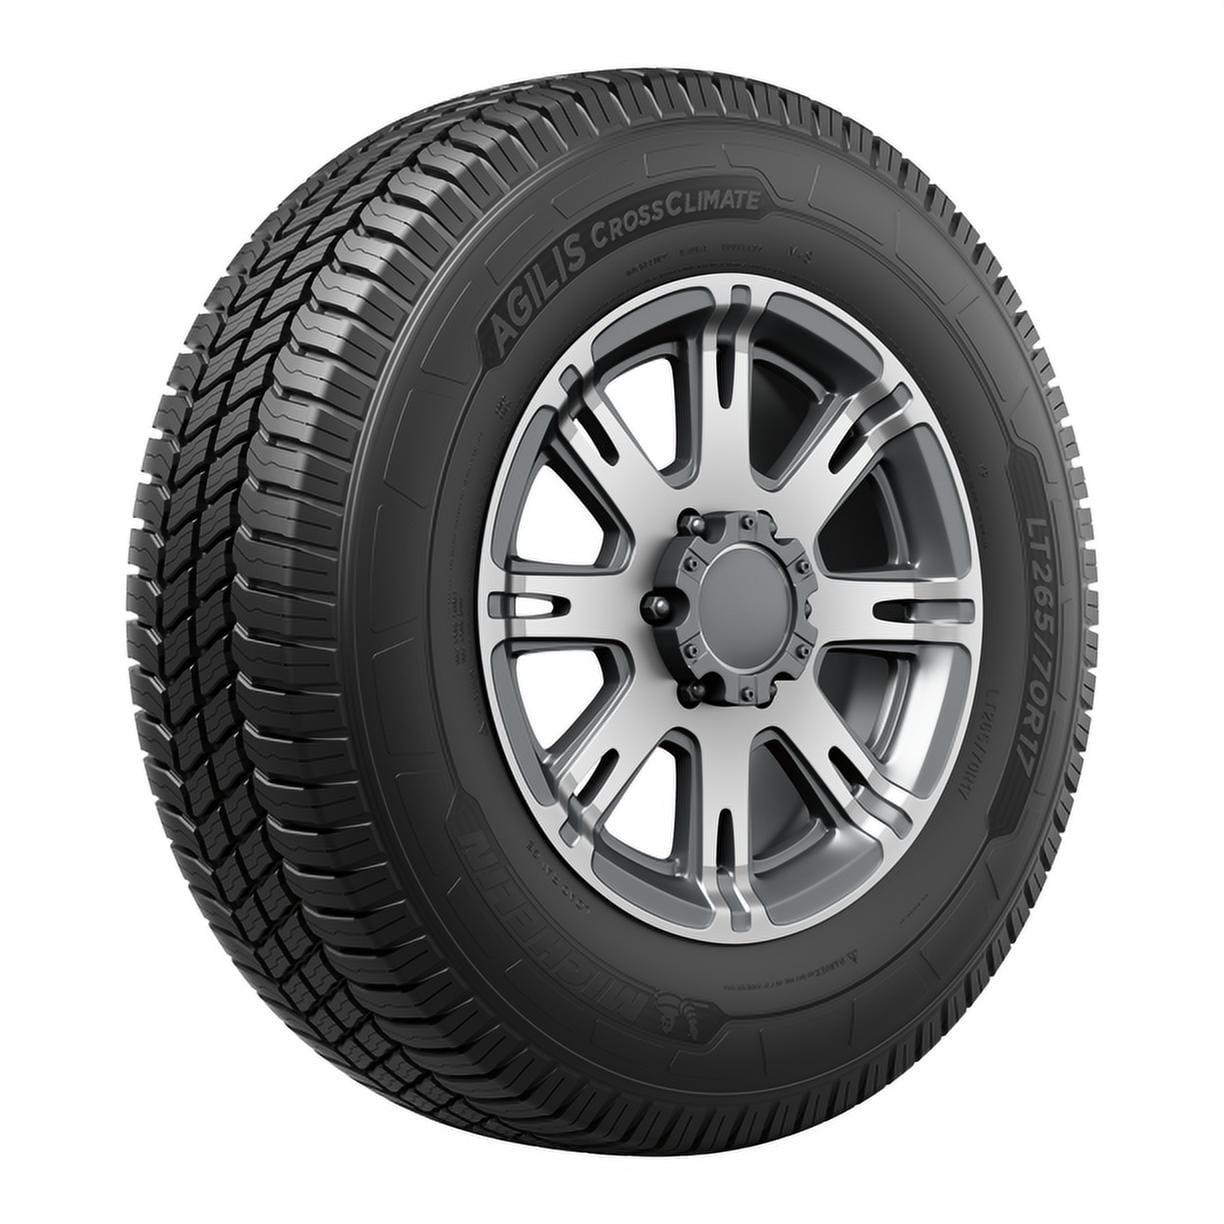 Michelin Agilis CrossClimate 225/75-16 115/112 R Tire